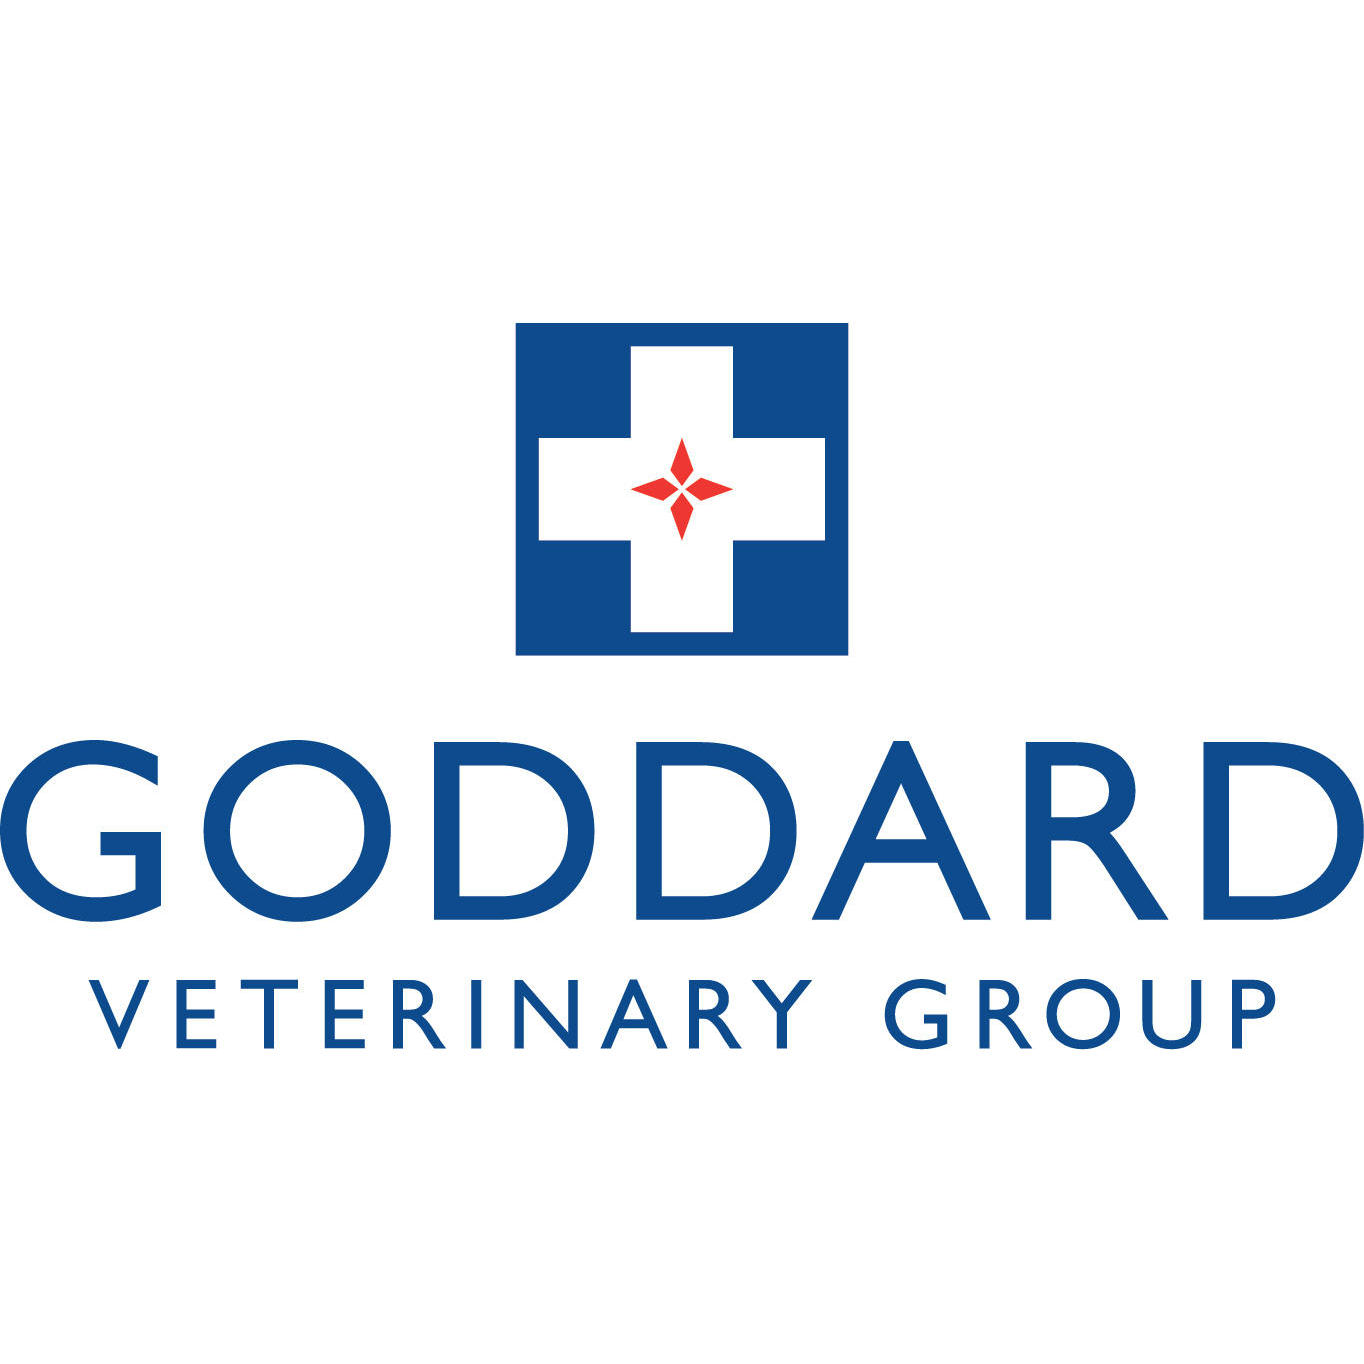 Goddard Veterinary Group, Eastcote - Pinner, London HA5 1QG - 020 8866 1842 | ShowMeLocal.com